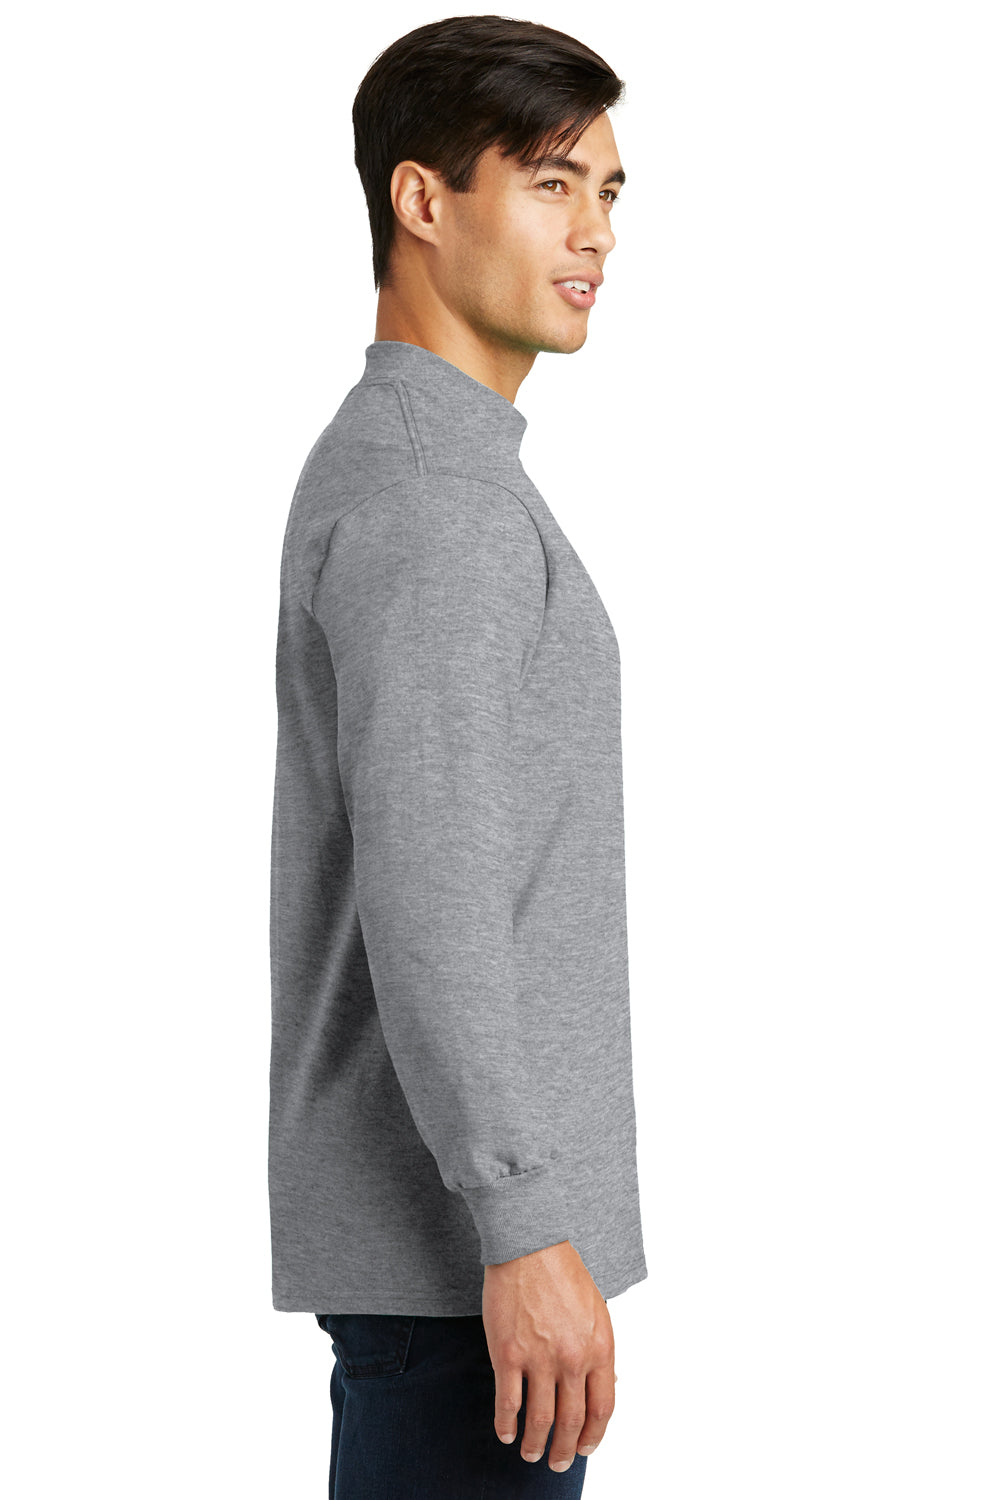 Port & Company PC61M Mens Essential Long Sleeve Mock Neck T-Shirt Heather Grey Side